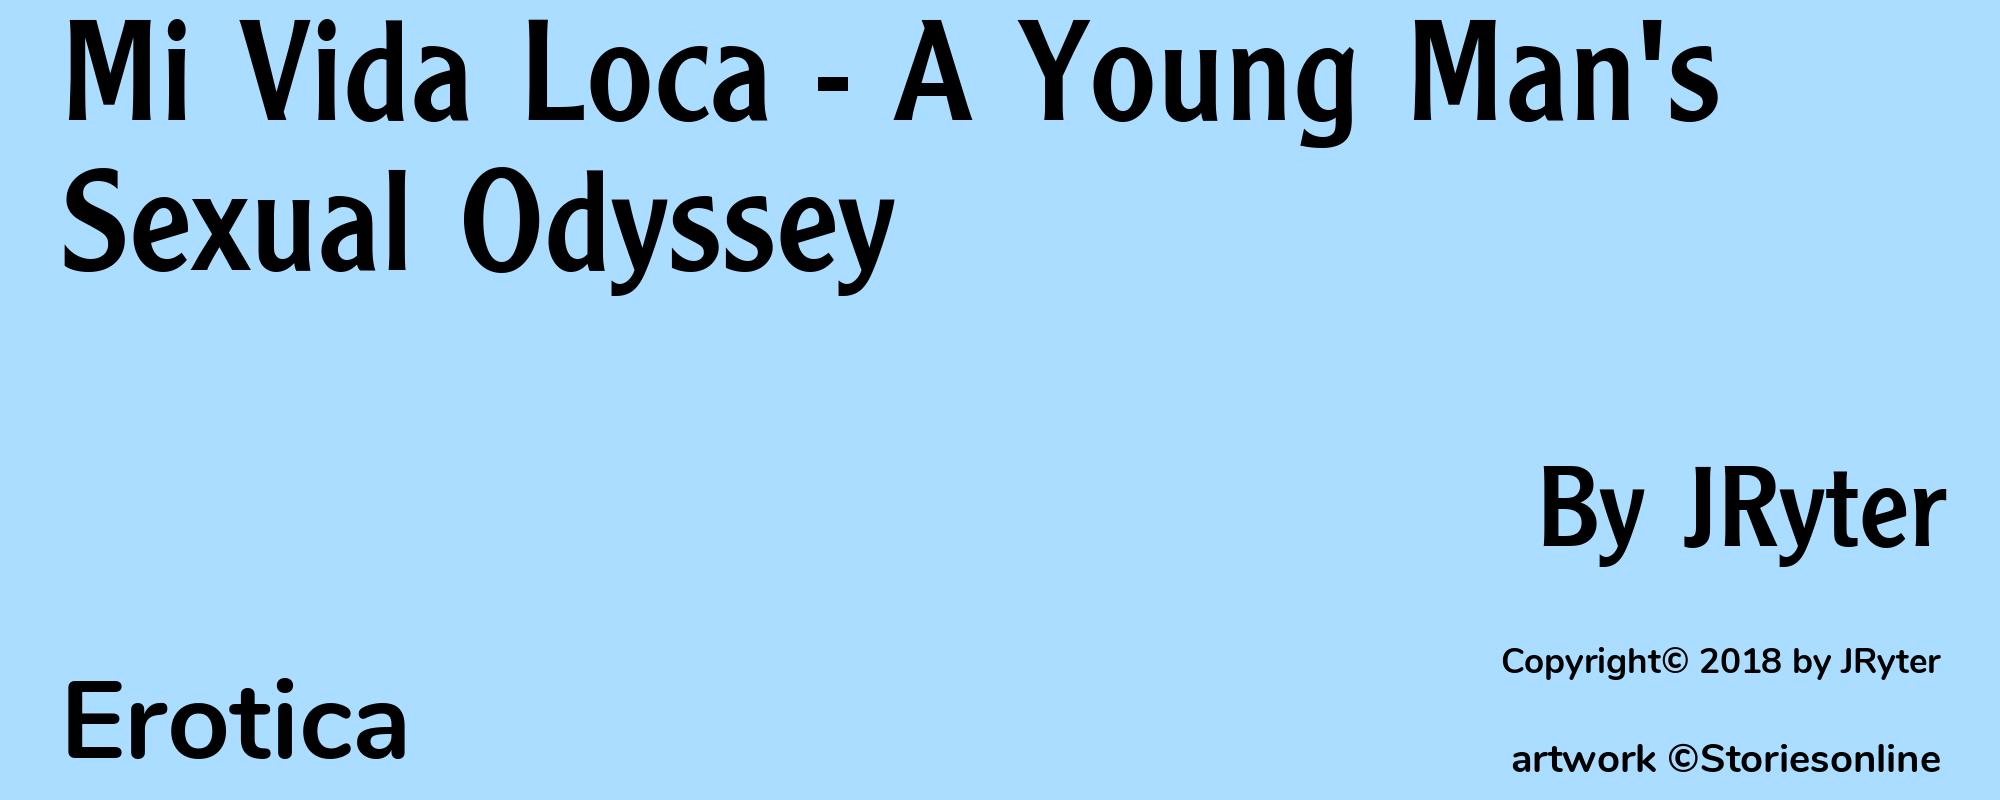 Mi Vida Loca - A Young Man's Sexual Odyssey - Cover